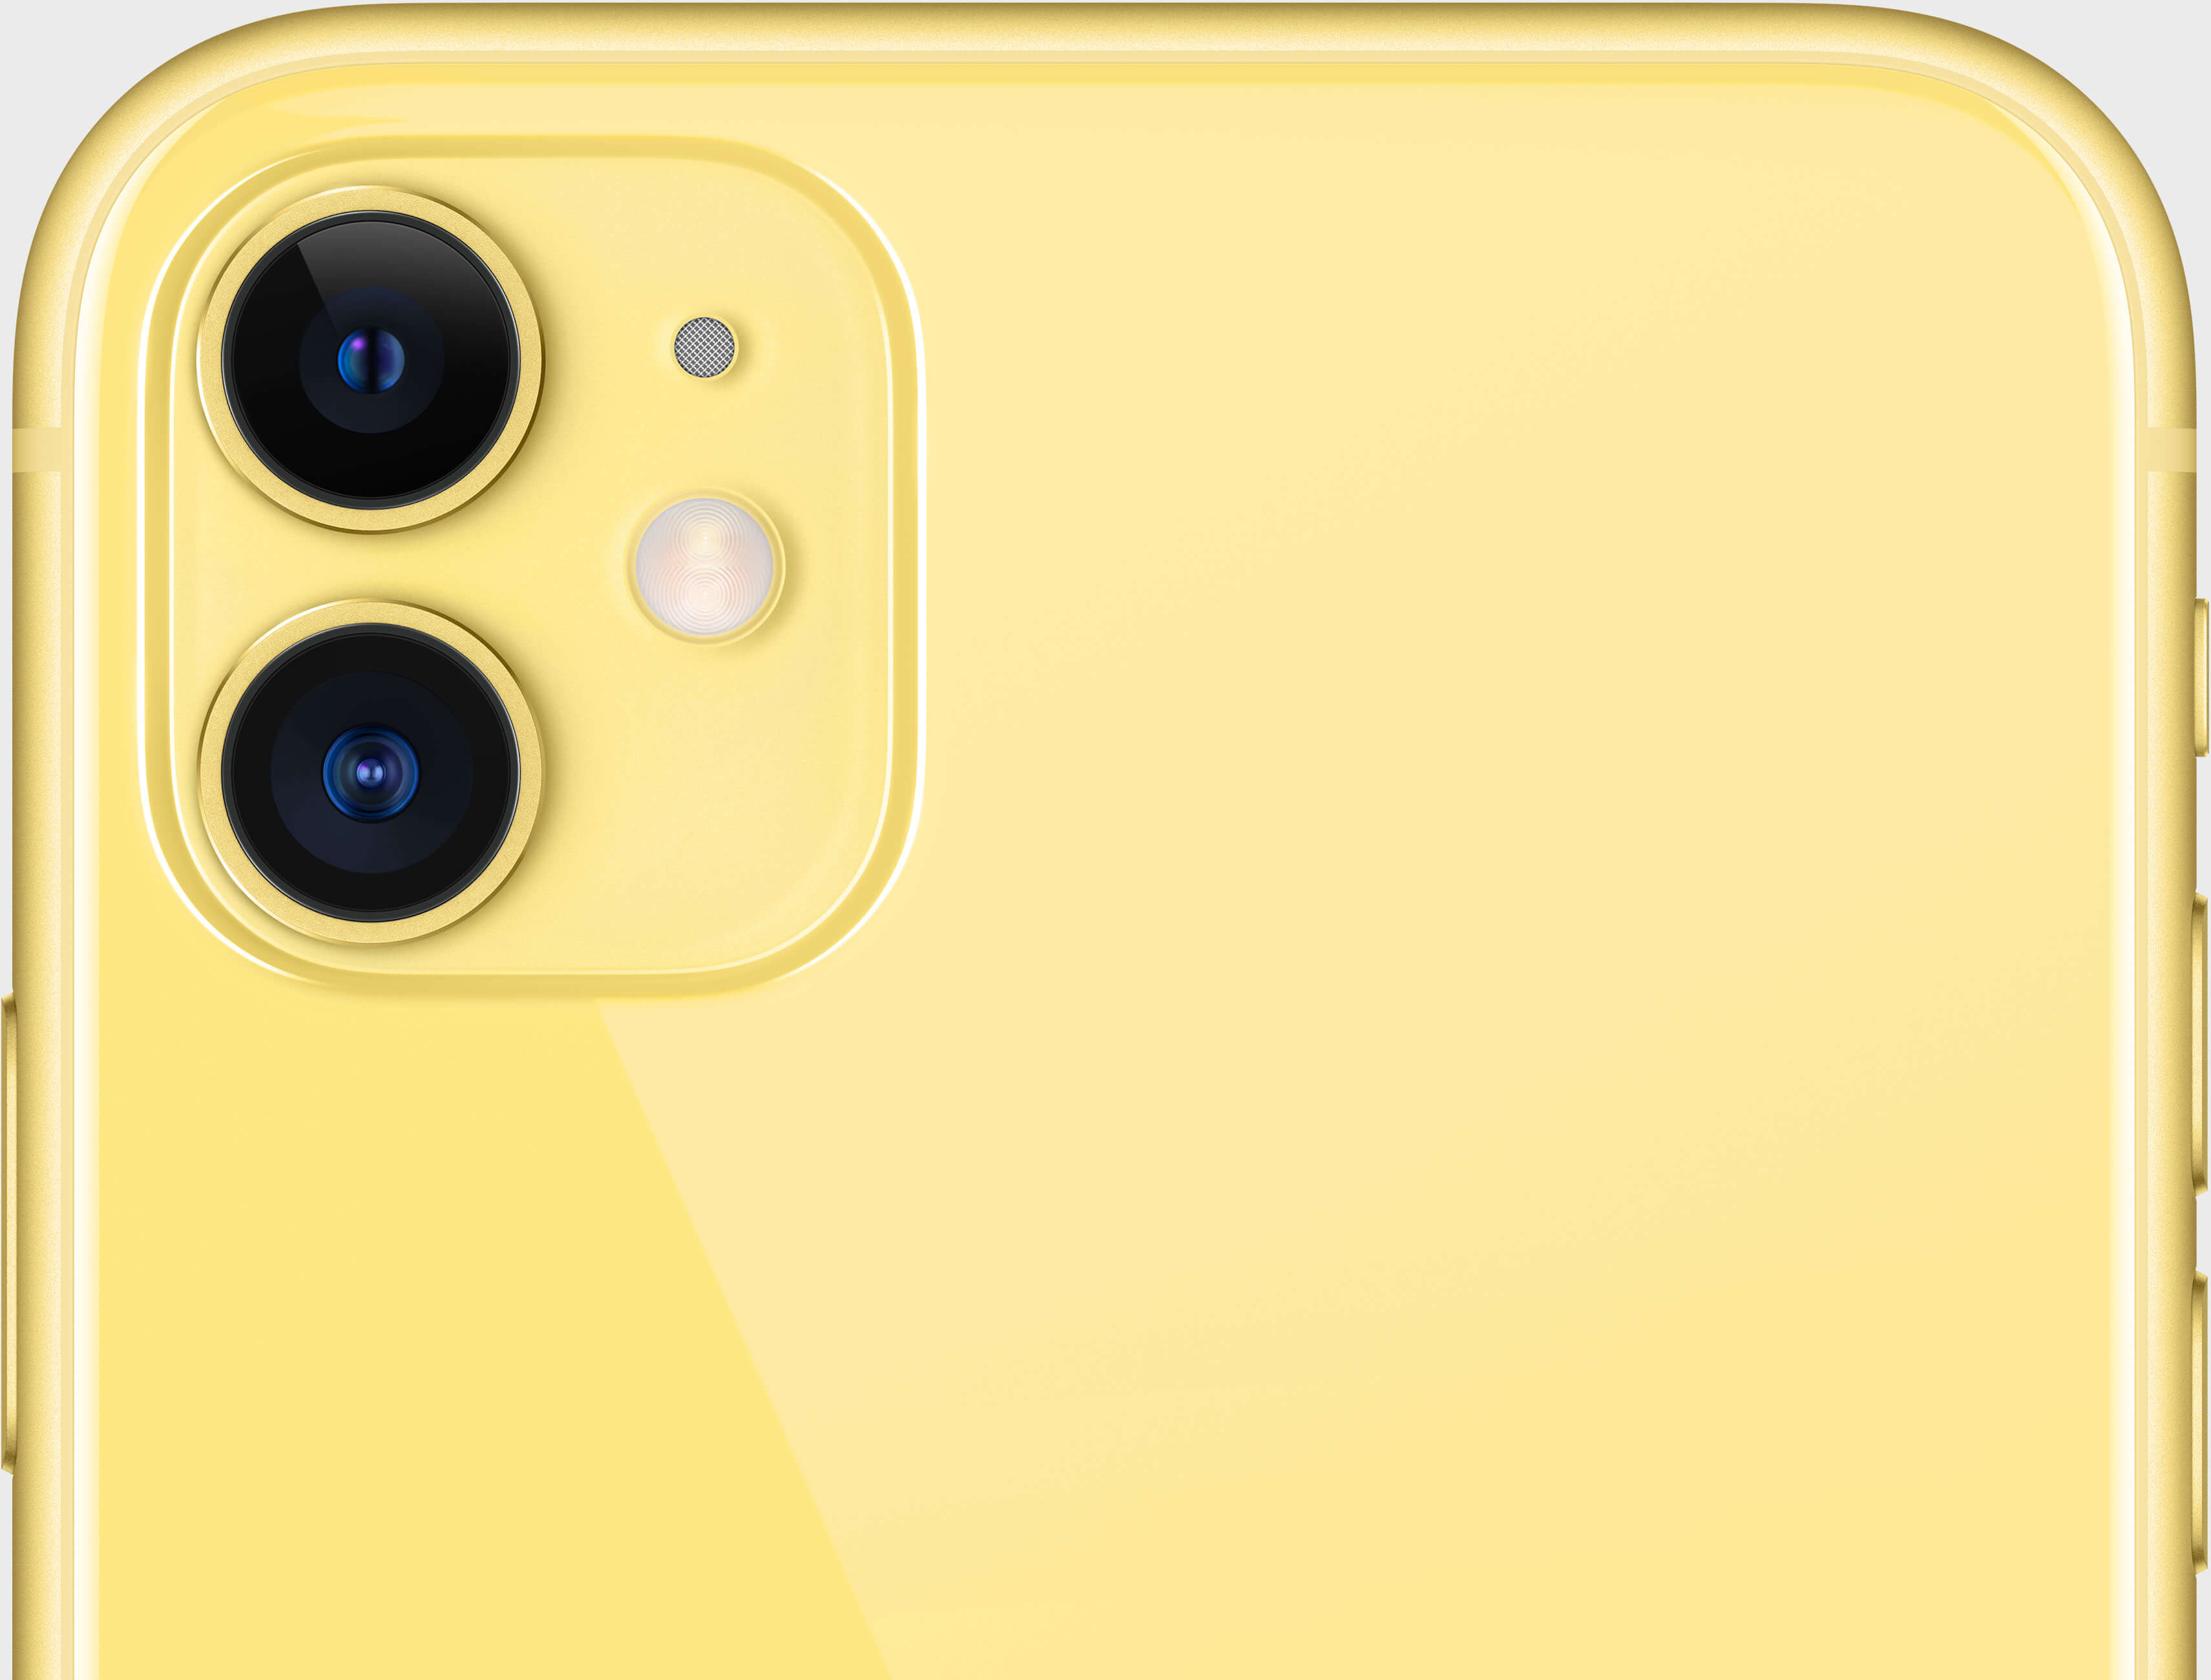 iPhone-11-yellow-back